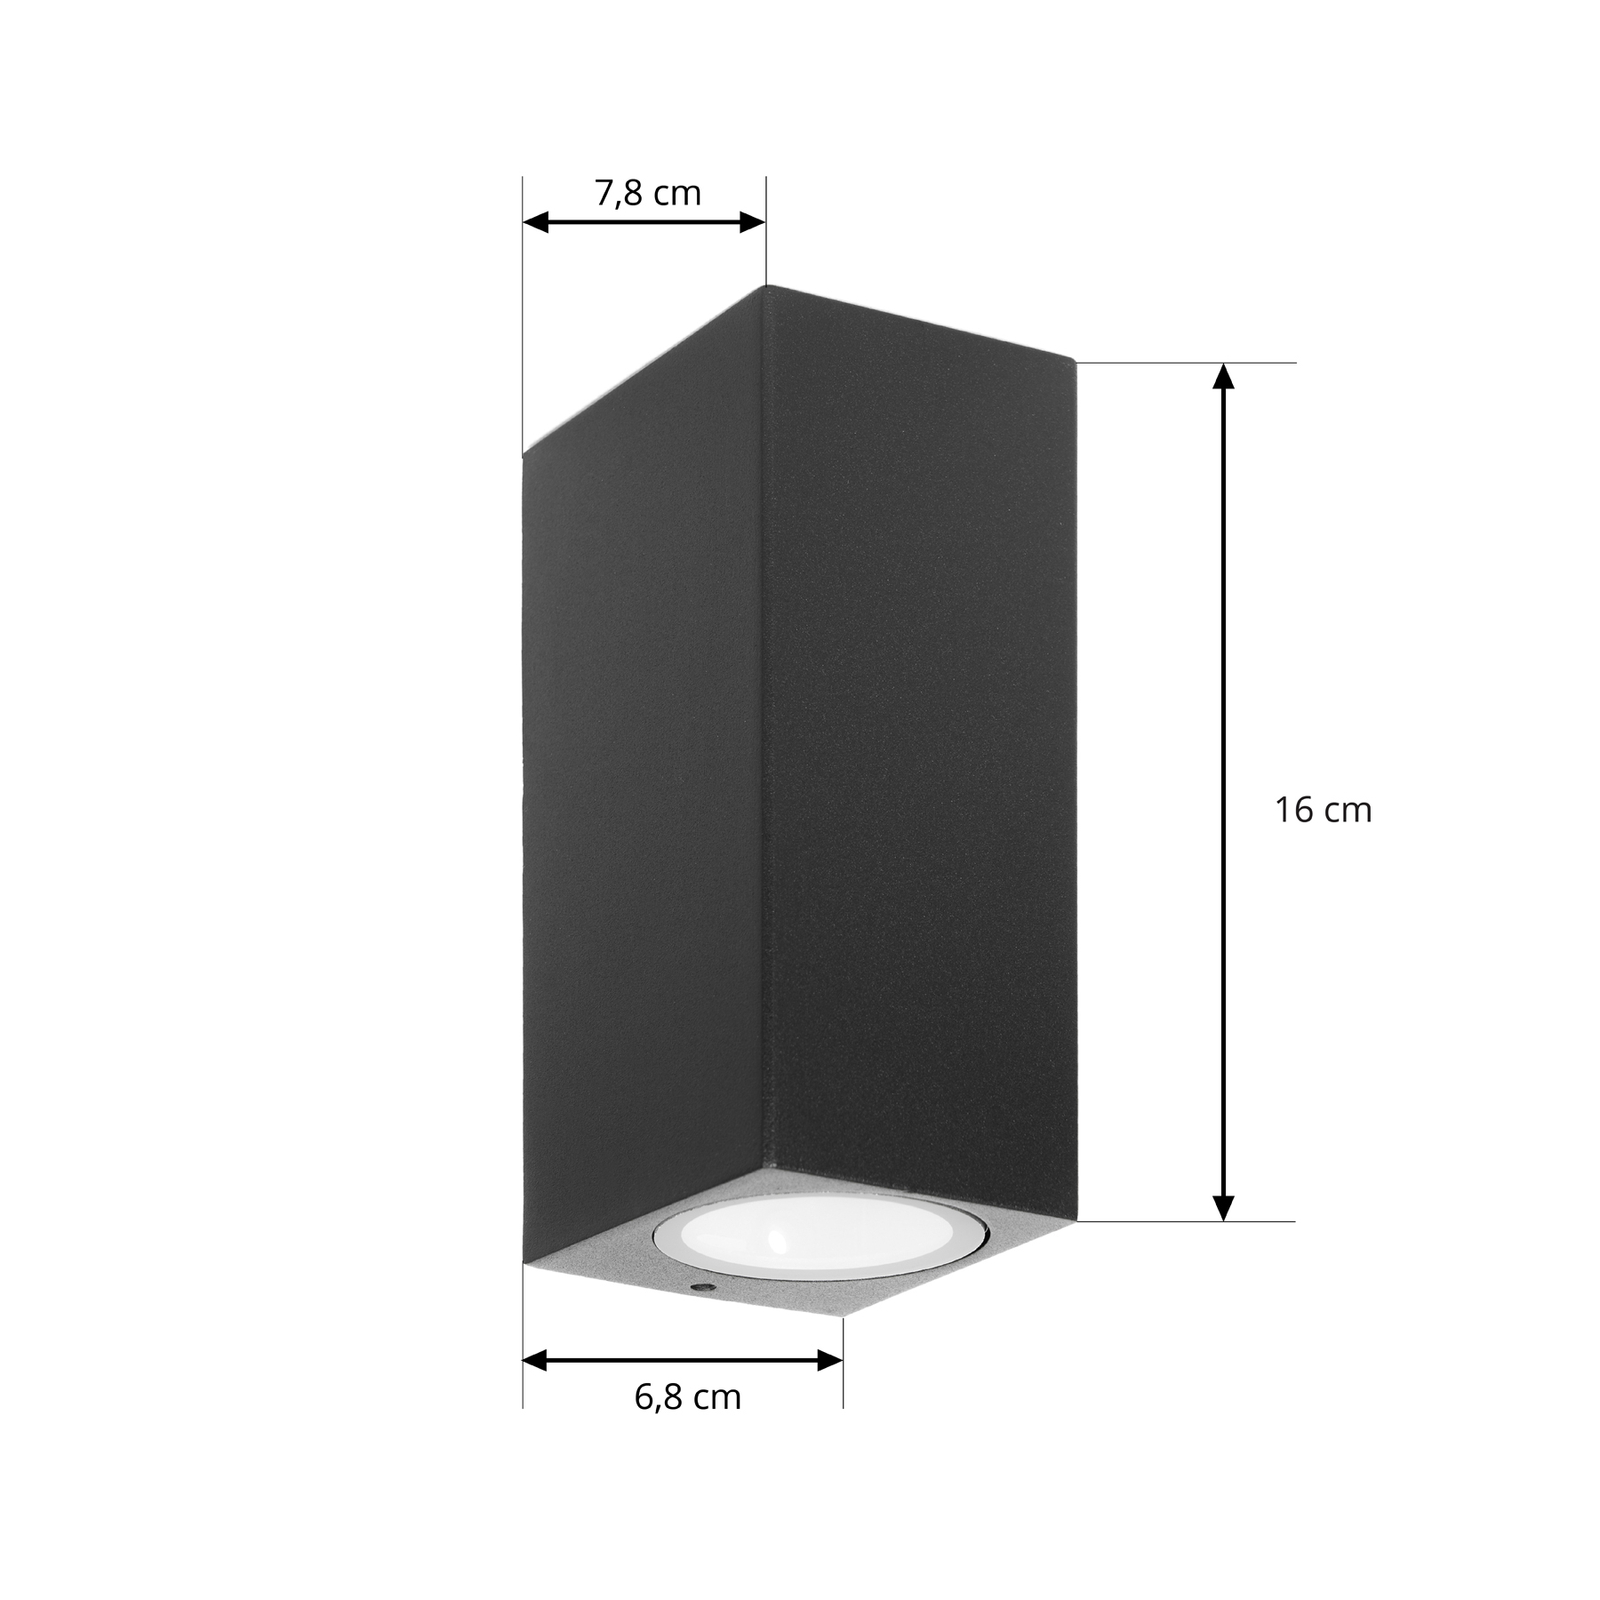 Prios outdoor wall light Tetje, black, angular, 16 cm